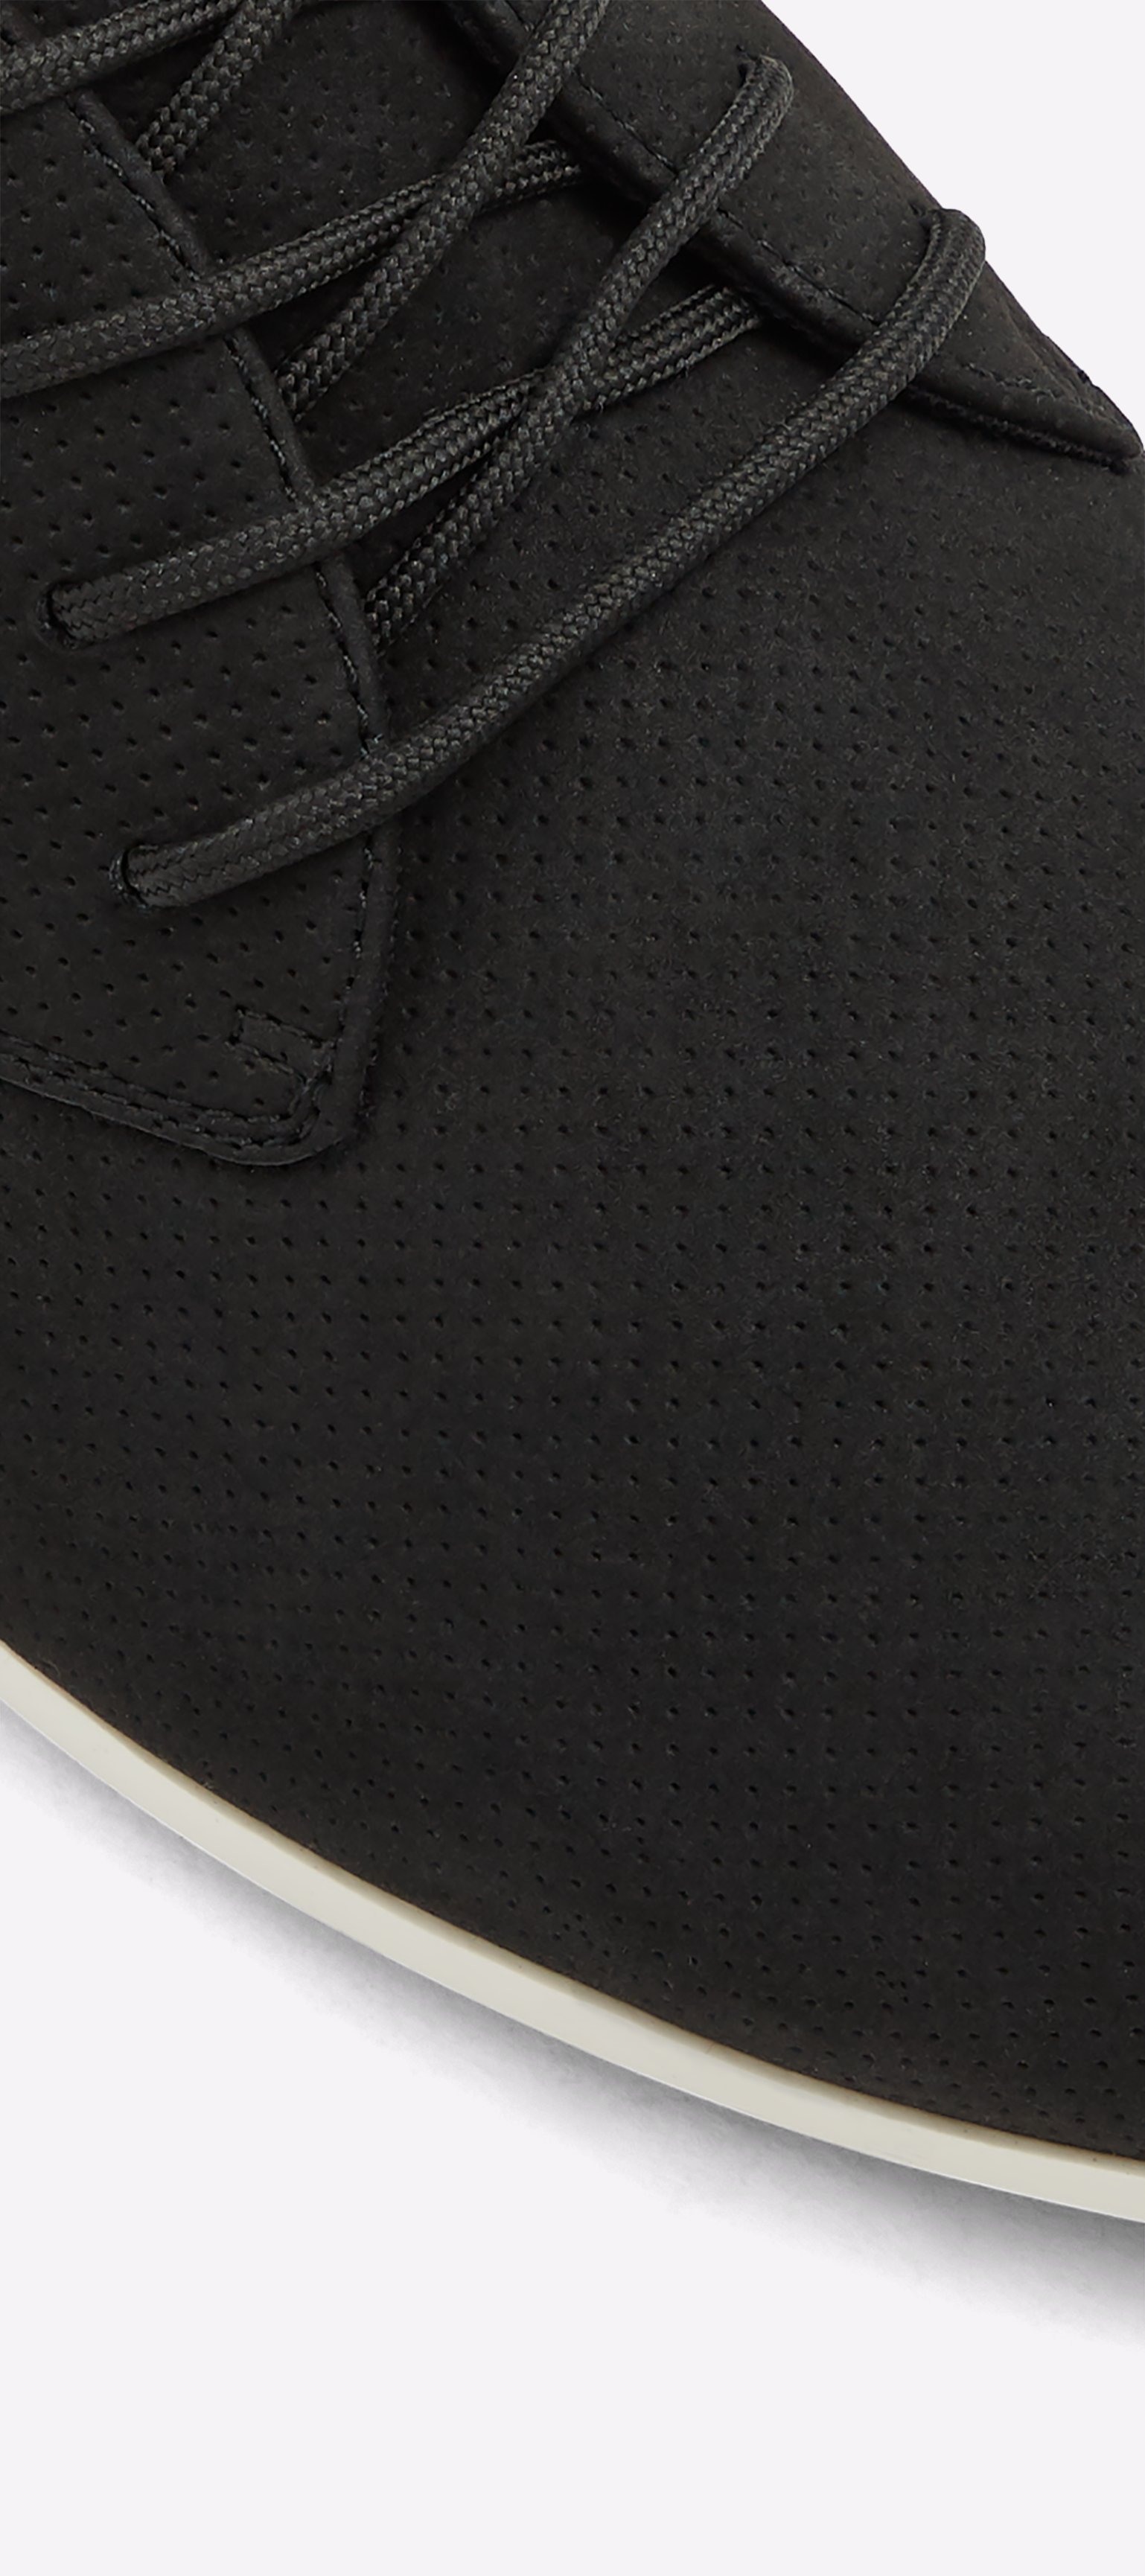 Aauwen-r Black Synthetic Nubuck Men's Sneakers | ALDO US